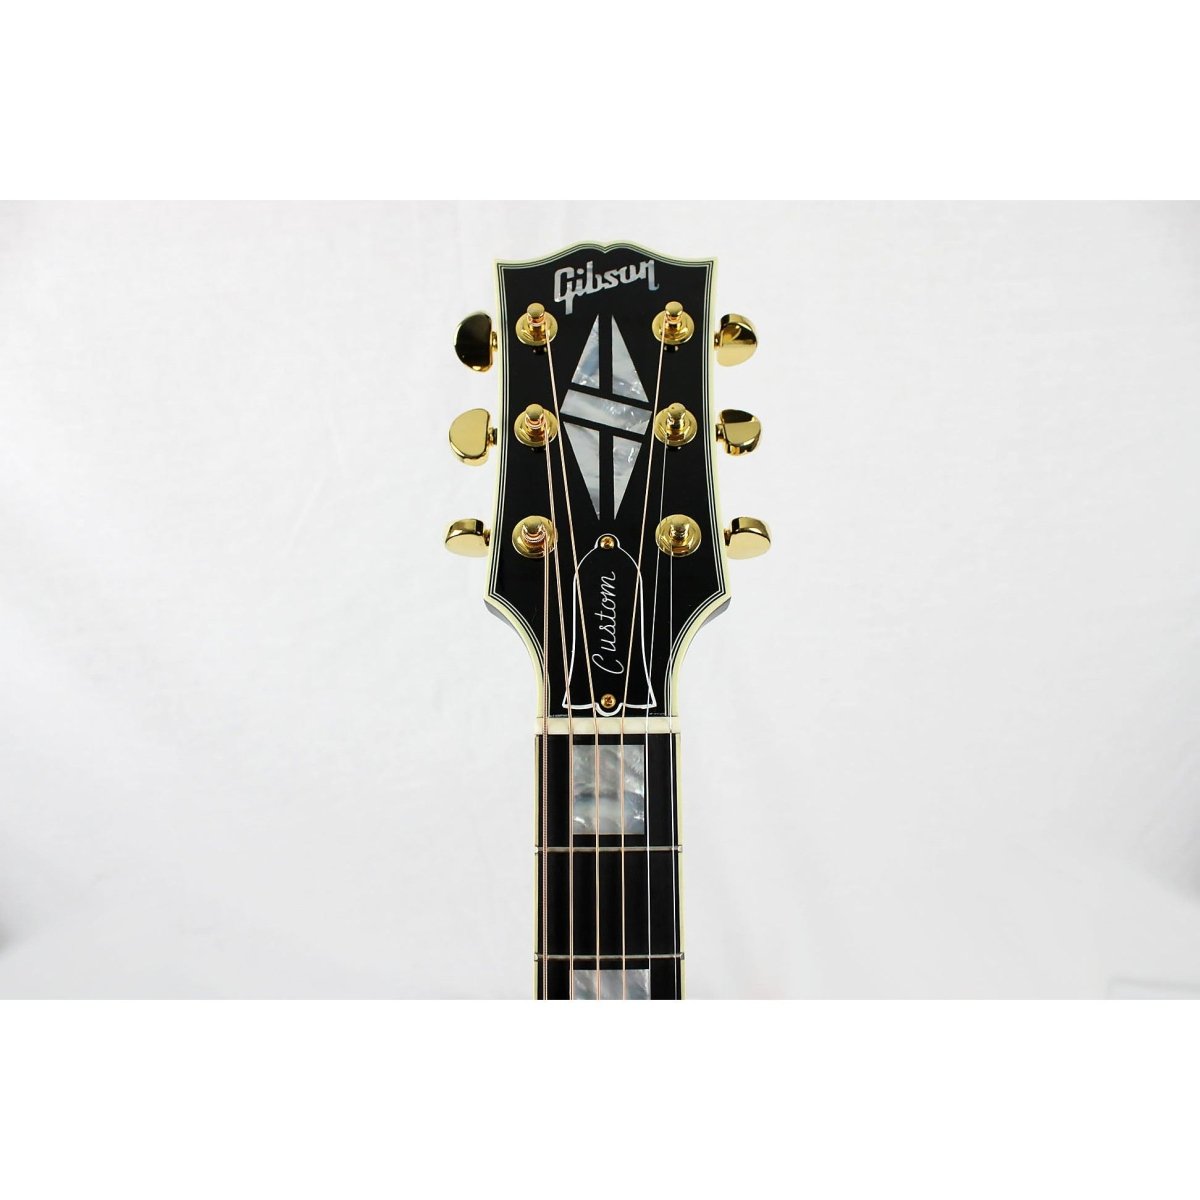 Gibson Custom Shop Acoustic J-45 Custom - Ebony